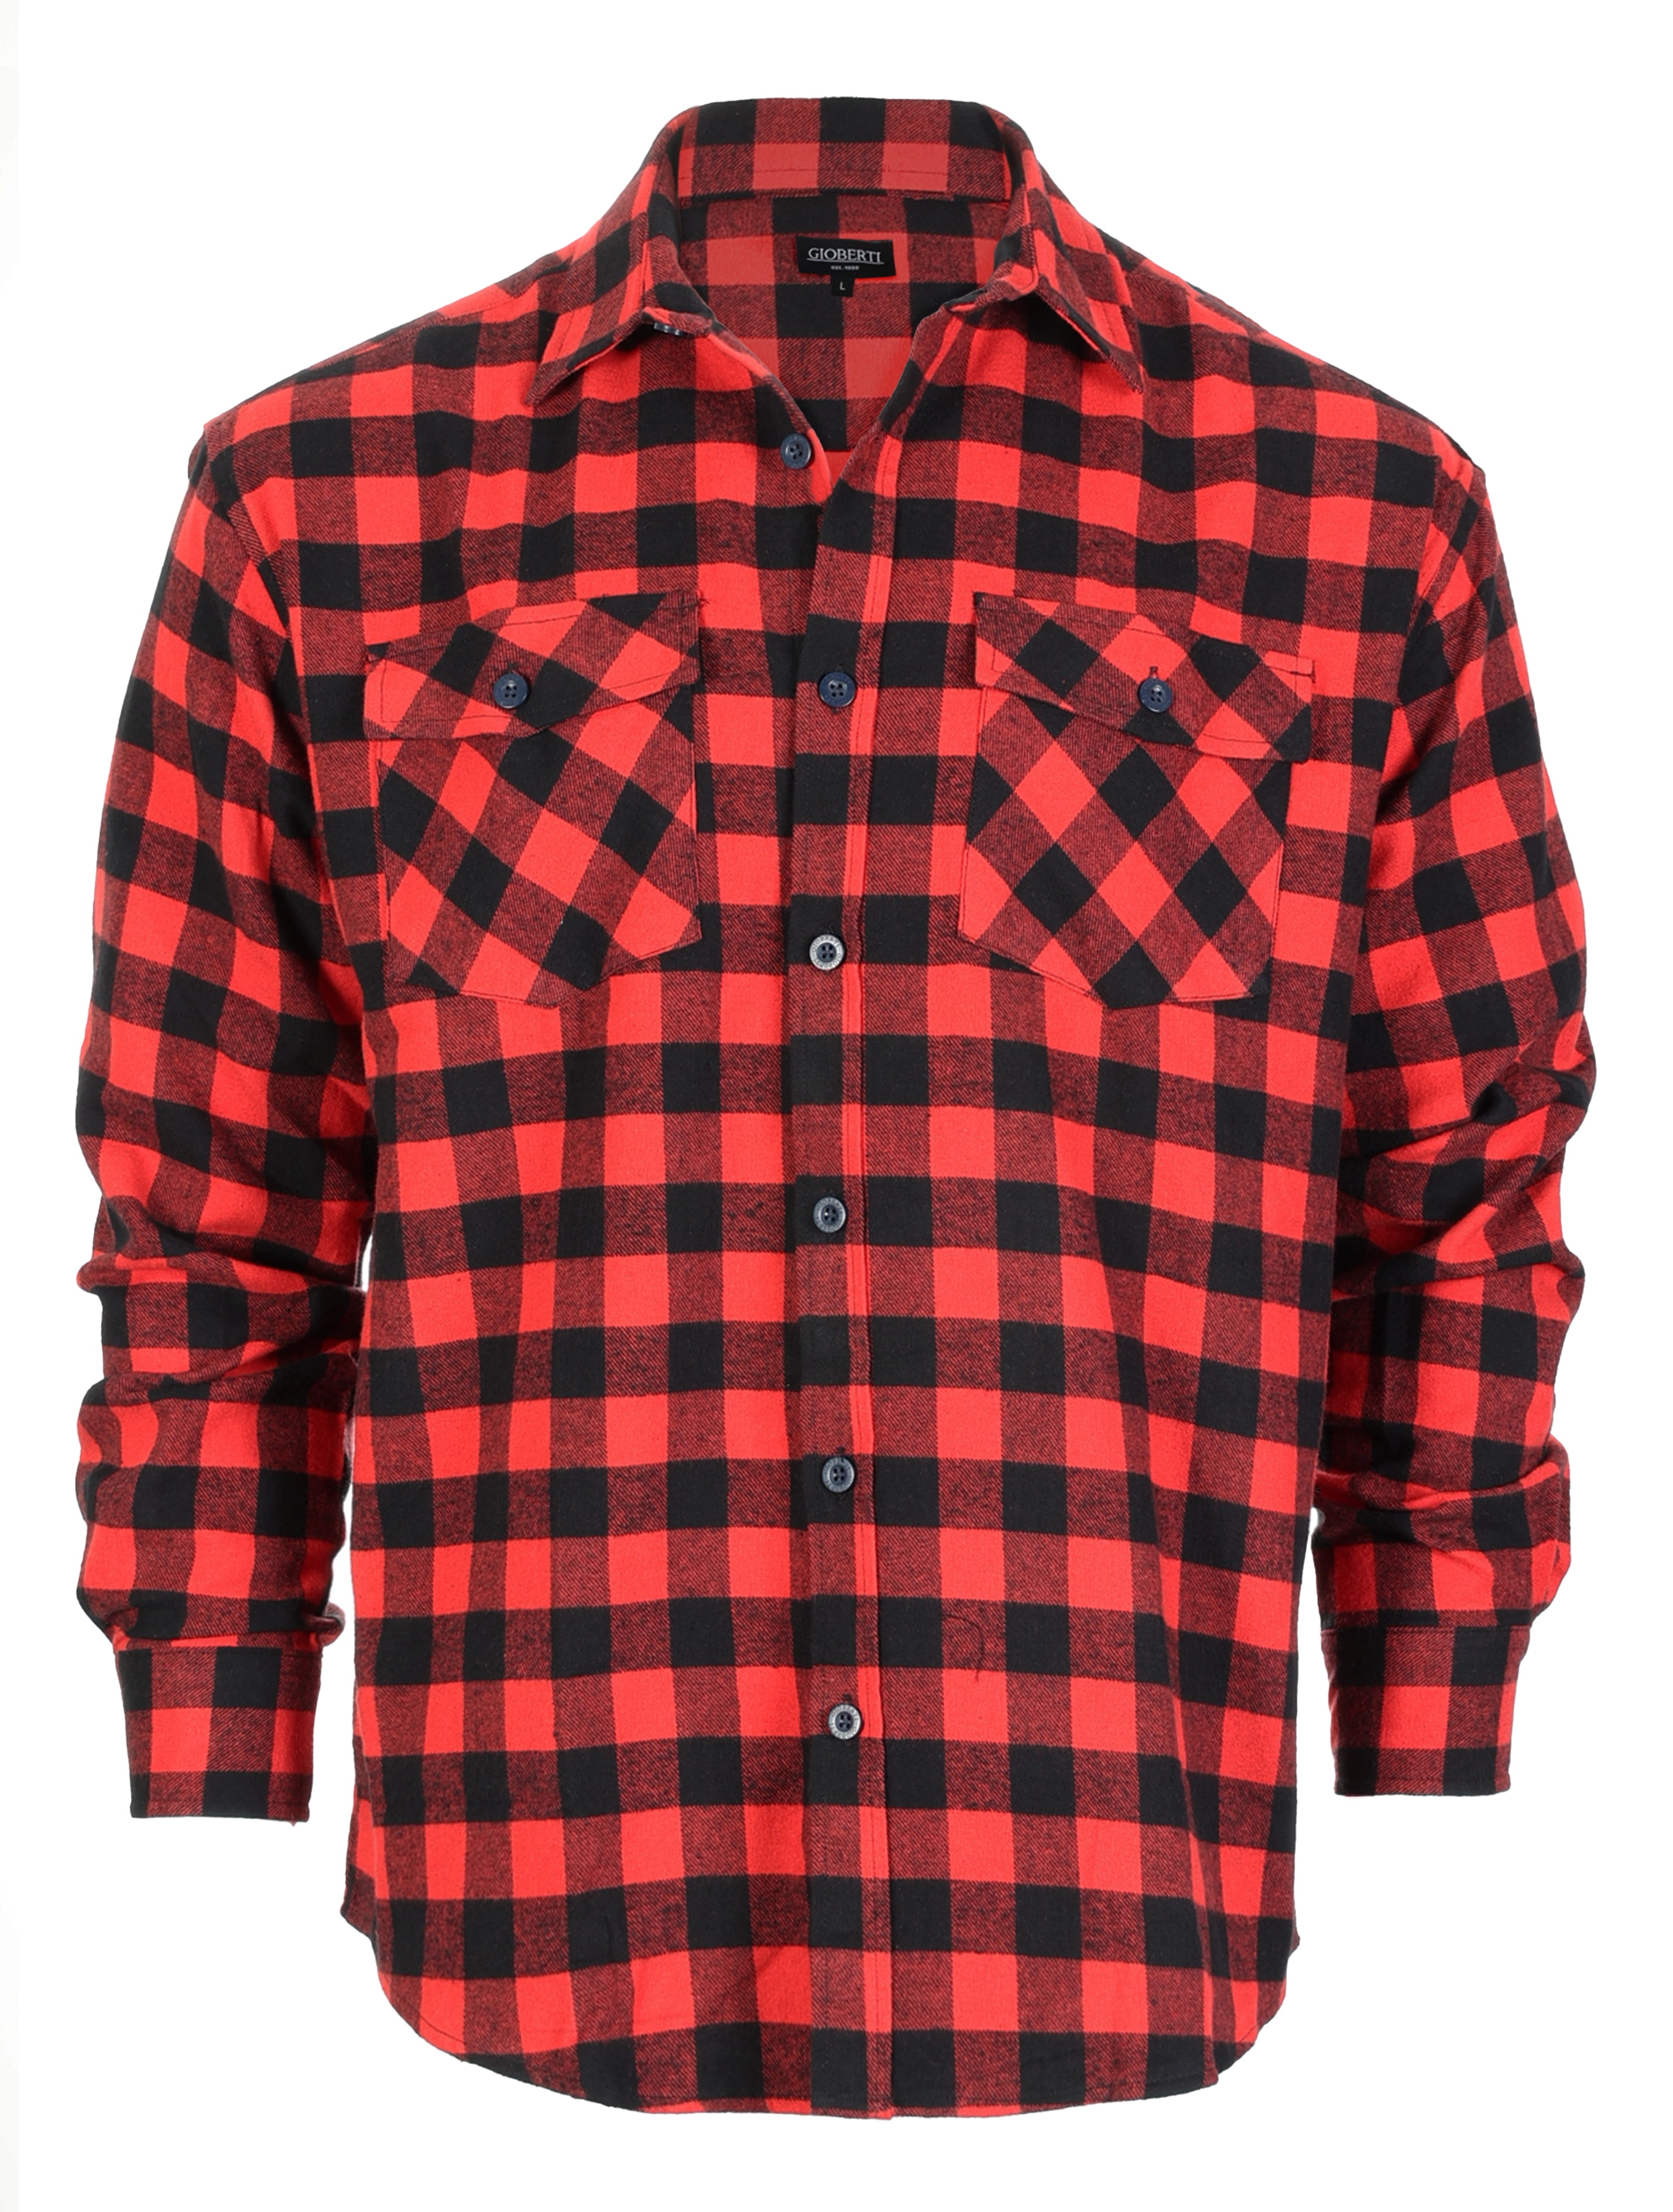 Gioberti Men's Plaid Checkered Brushed Flannel Shirt - Walmart.com